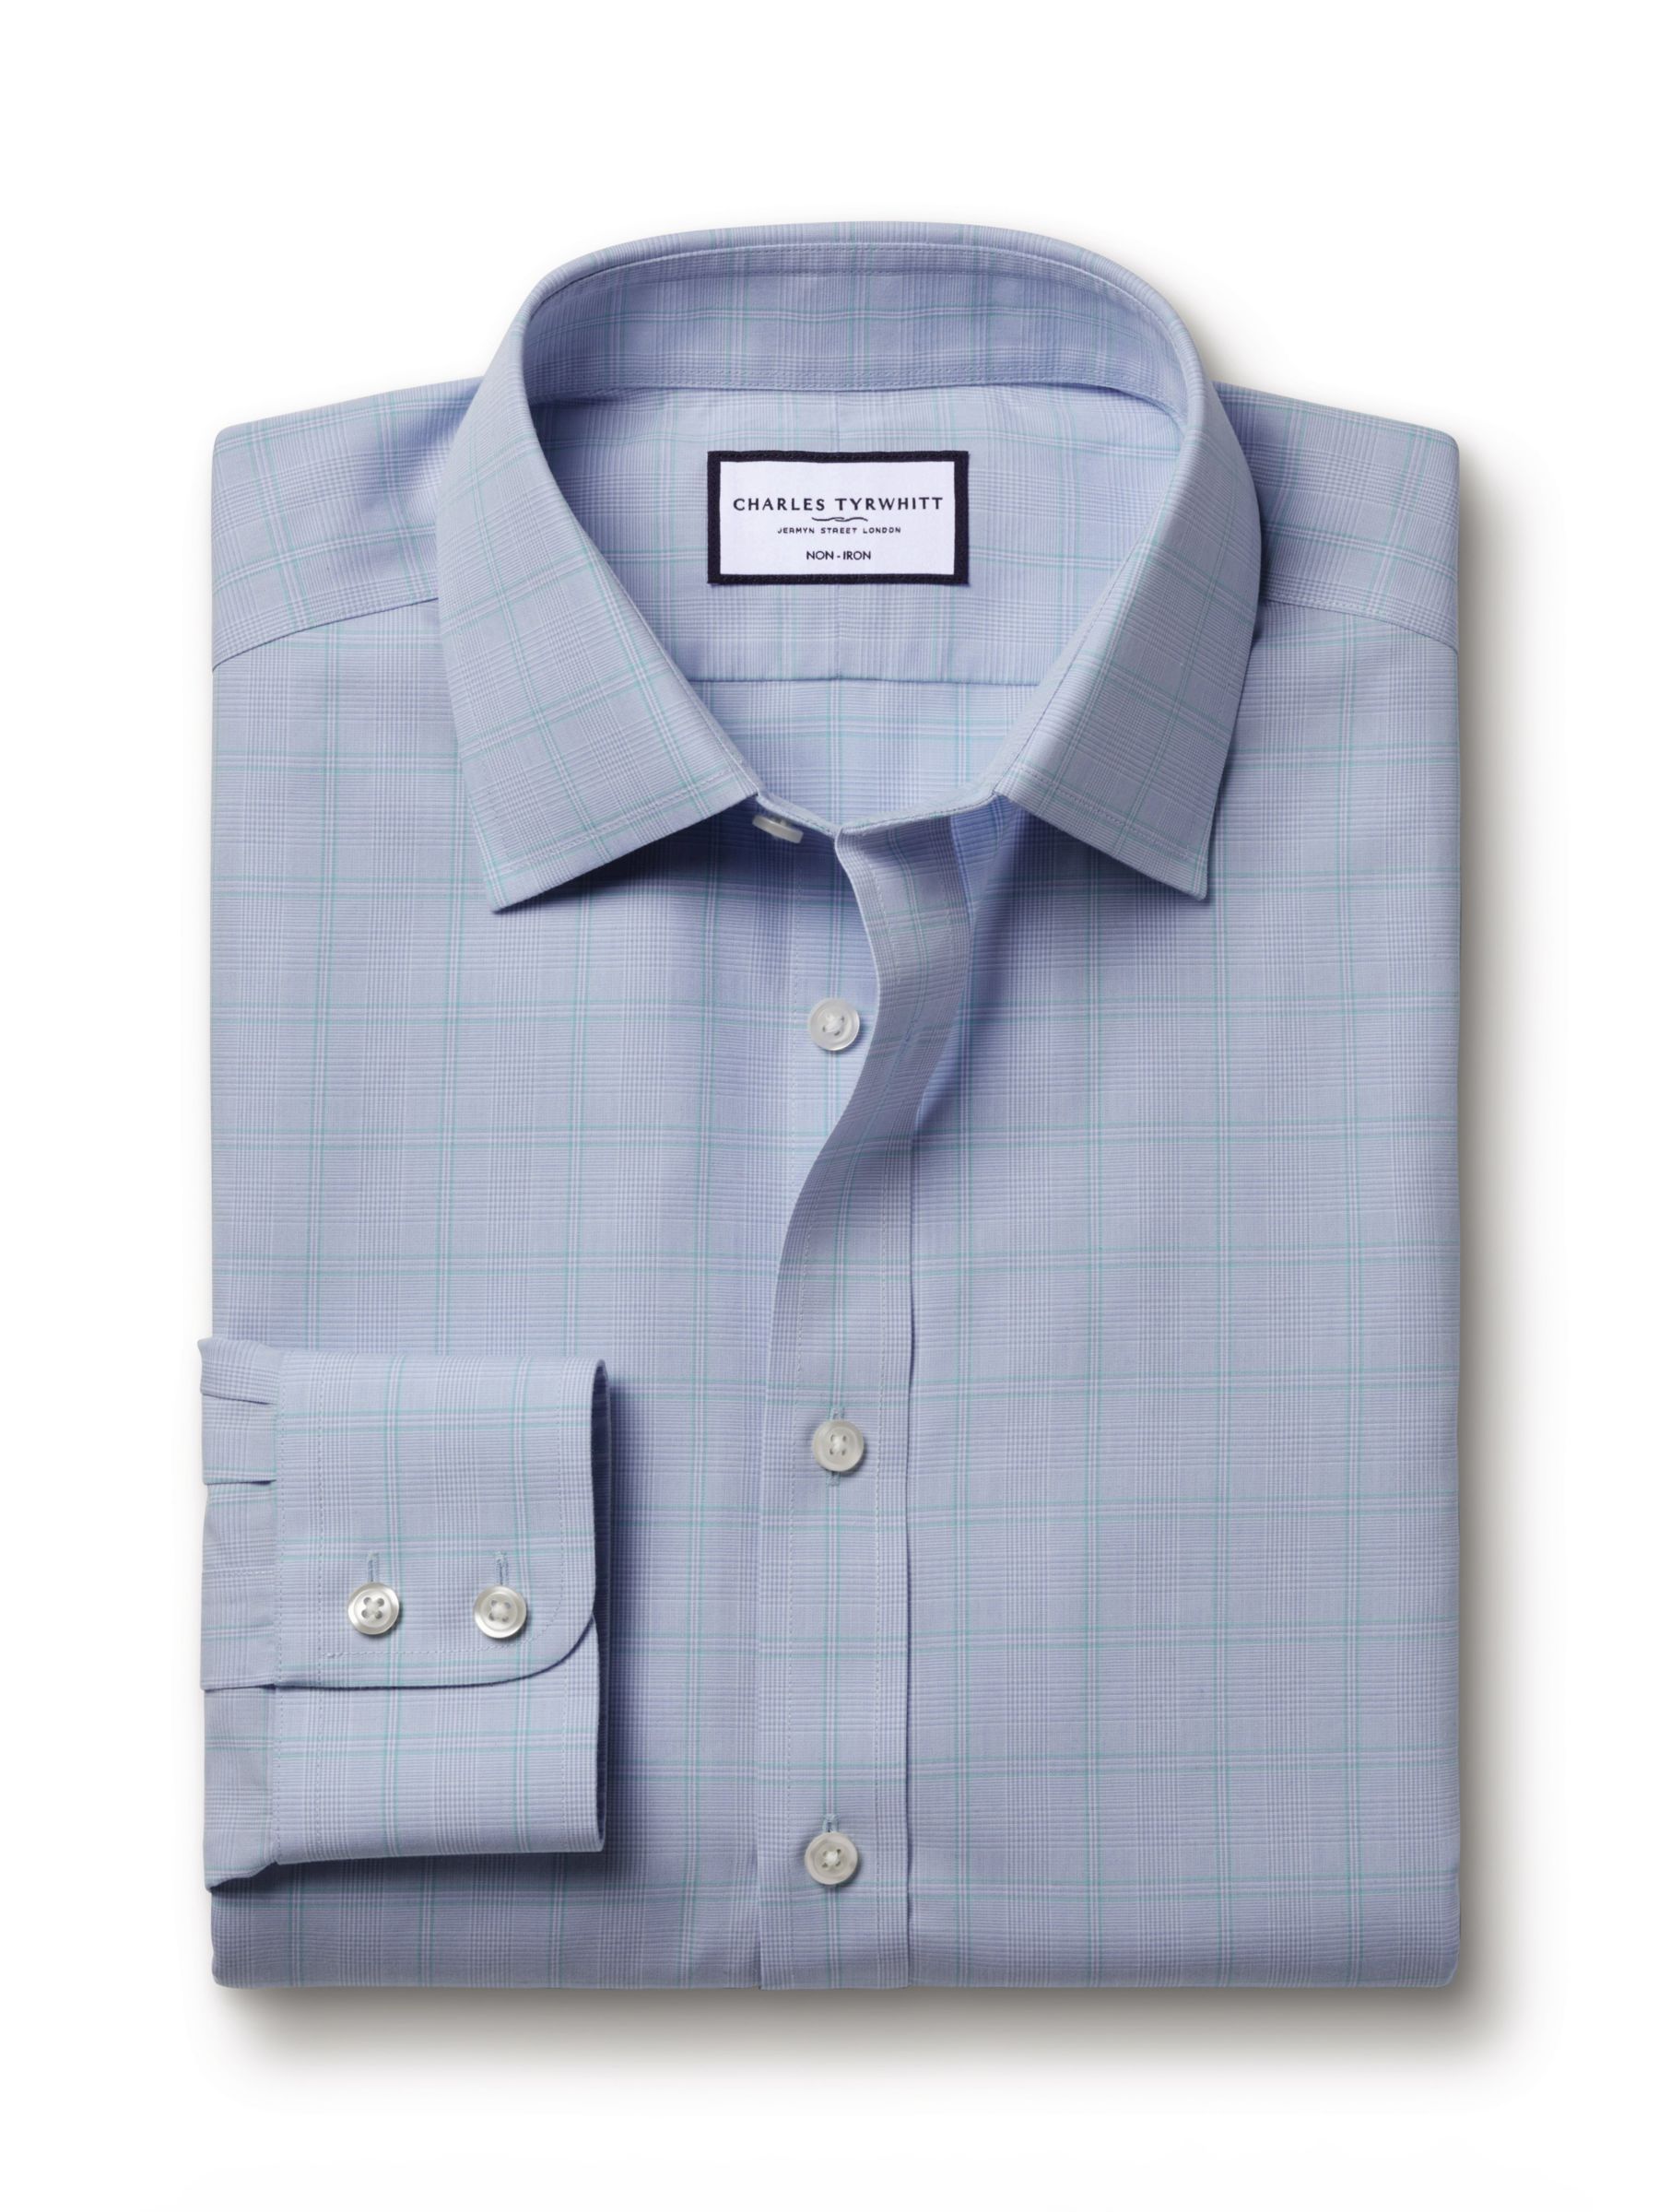 Charles Tyrwhitt Key Check Non-Iron Poplin Shirt, Light Blue, 17.5 36